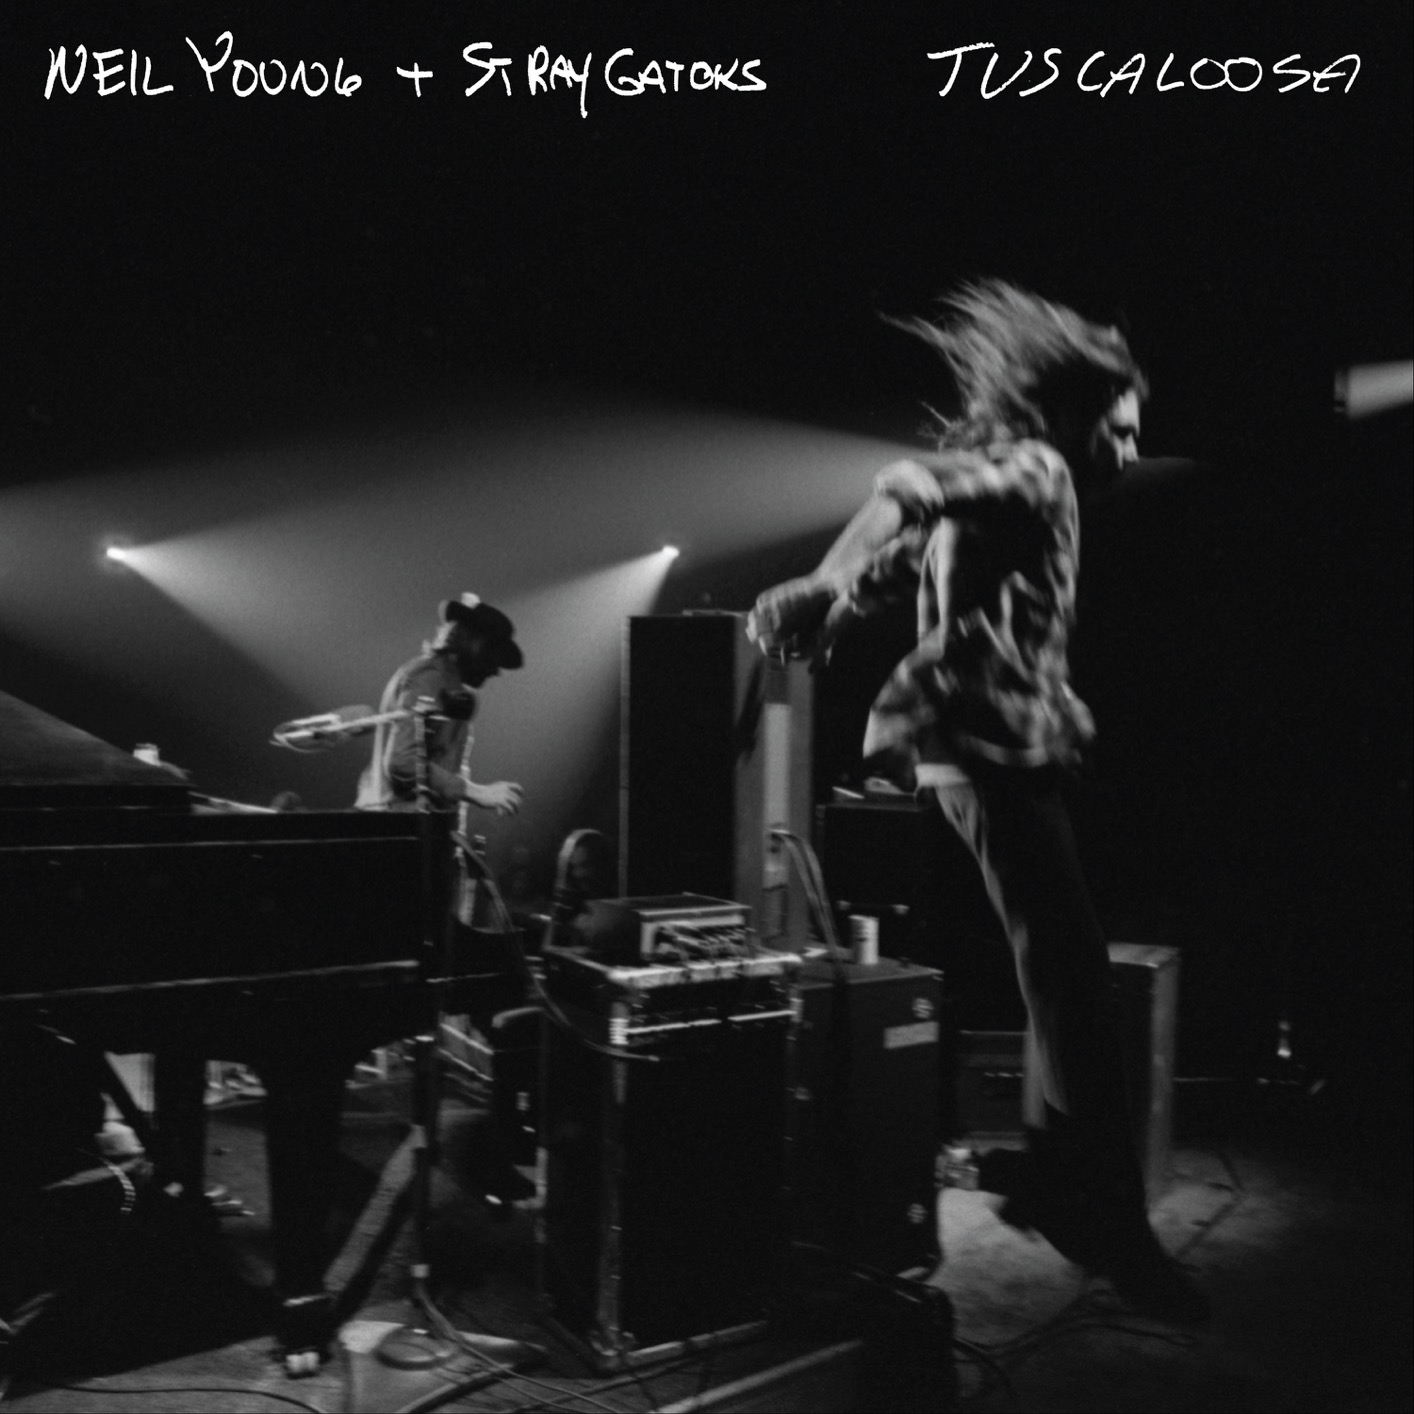 Neil Young + Stray Gators - Tuscaloosa Live (2019) [FLAC 24bit/96kHz]